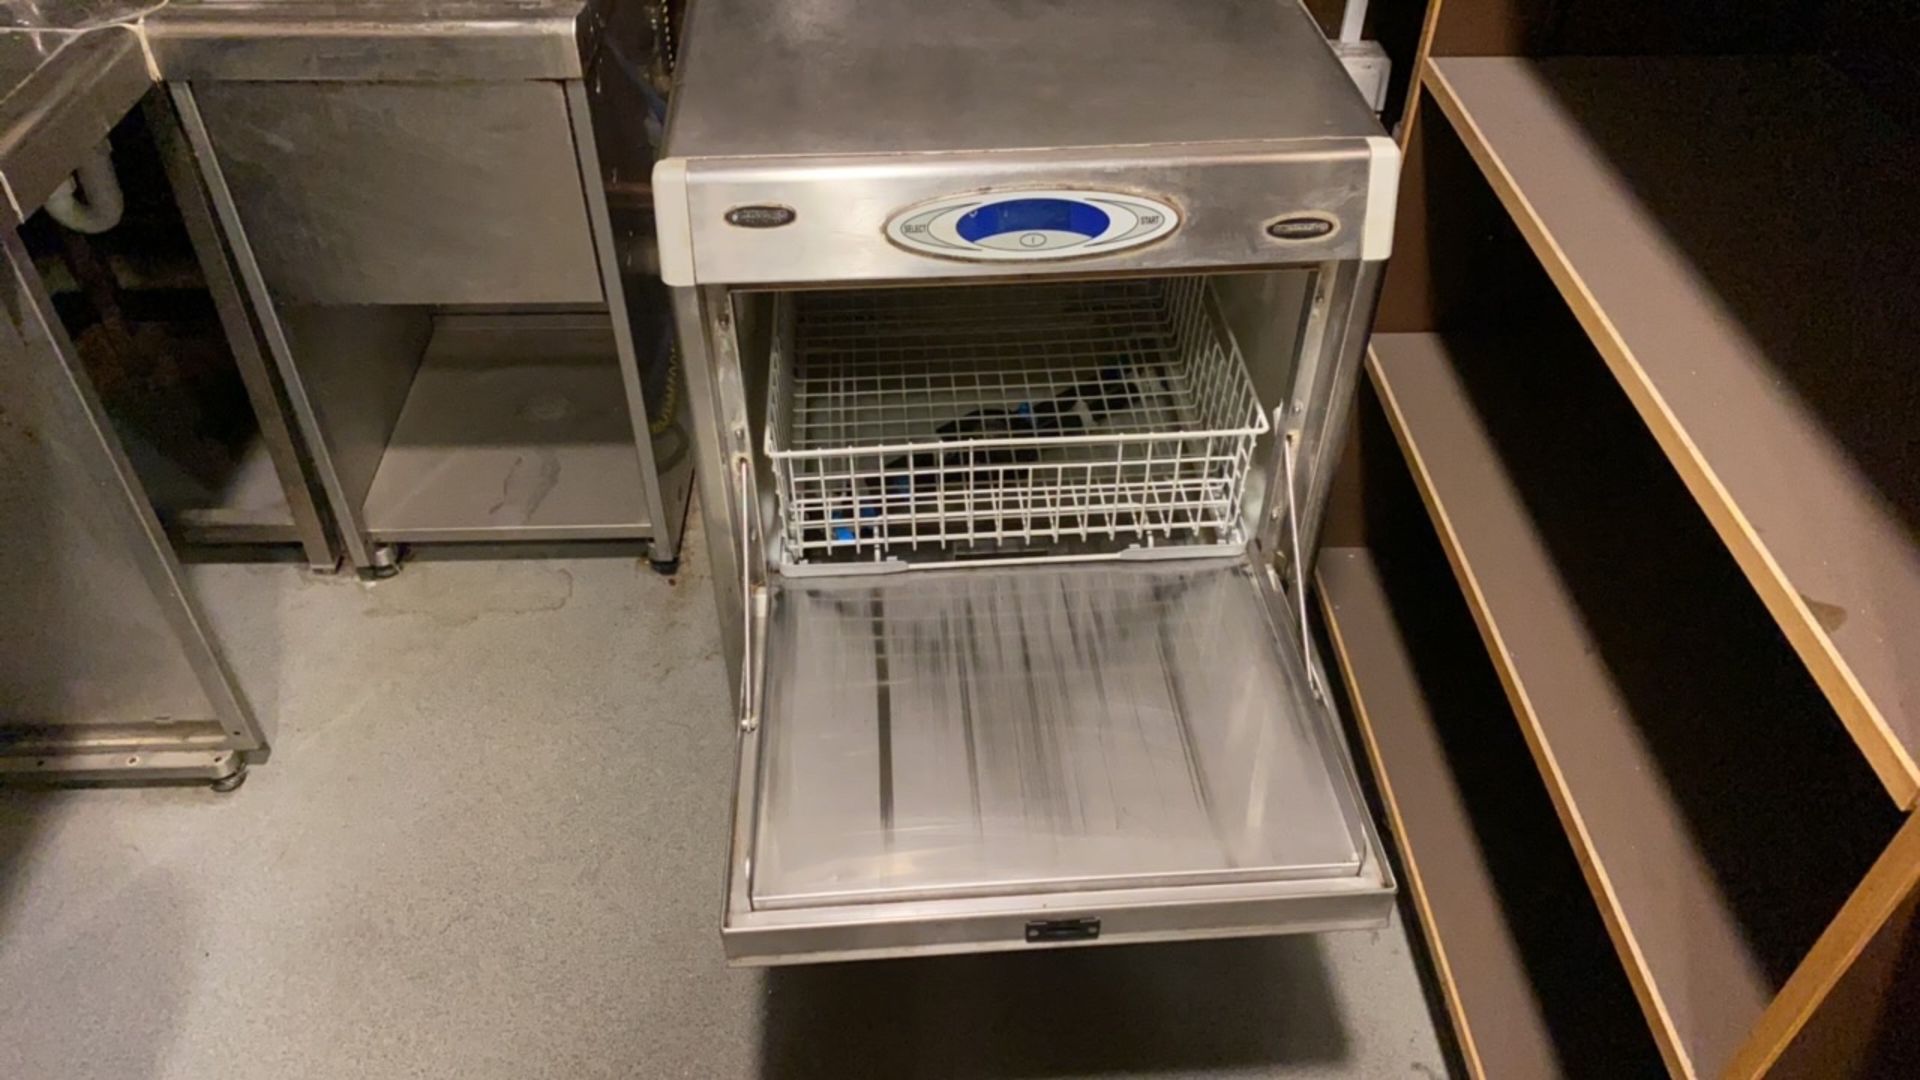 Clenaware dishwasher - Image 3 of 5